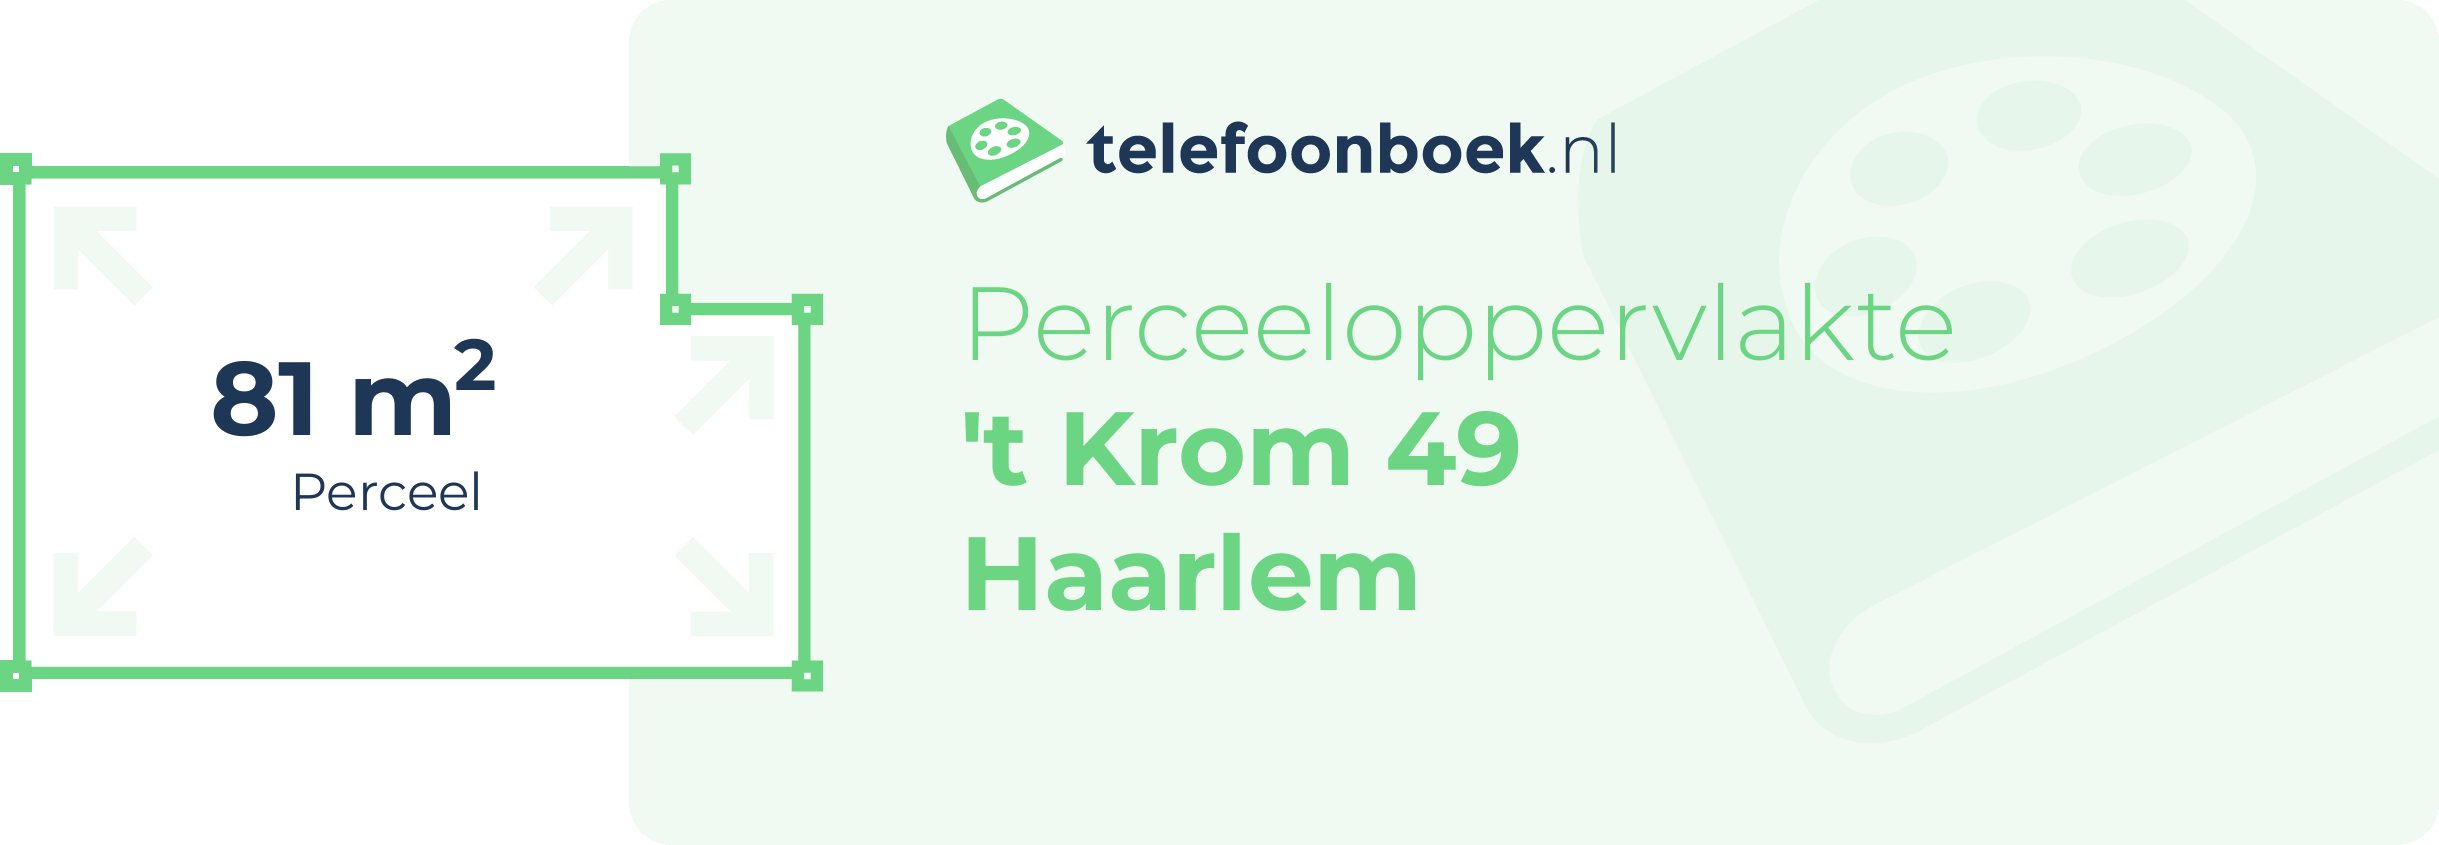 Perceeloppervlakte 't Krom 49 Haarlem